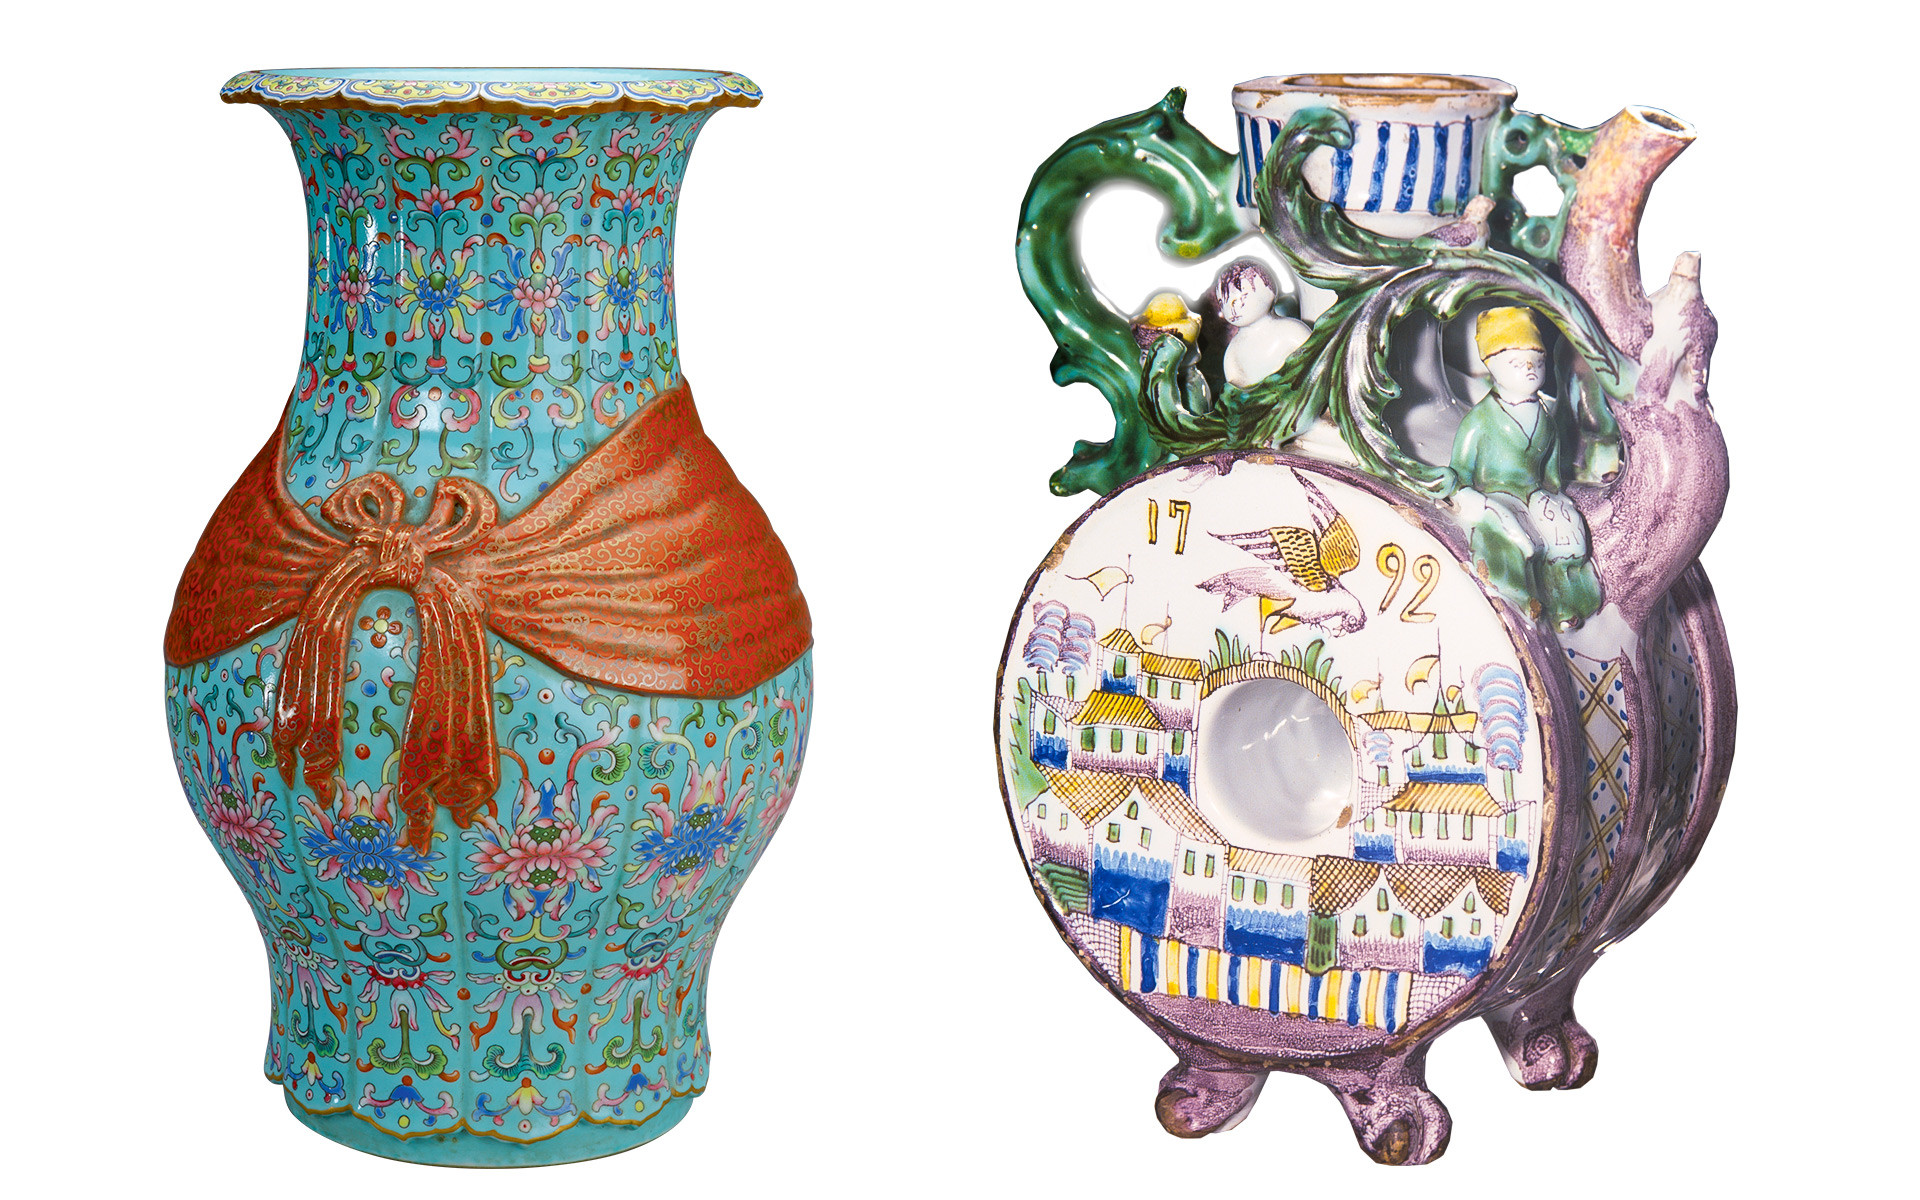 Left: Chinese Baofu vase of the Quing era, Qianlong period.
Right: Russian Gzhel jug, 18th century.